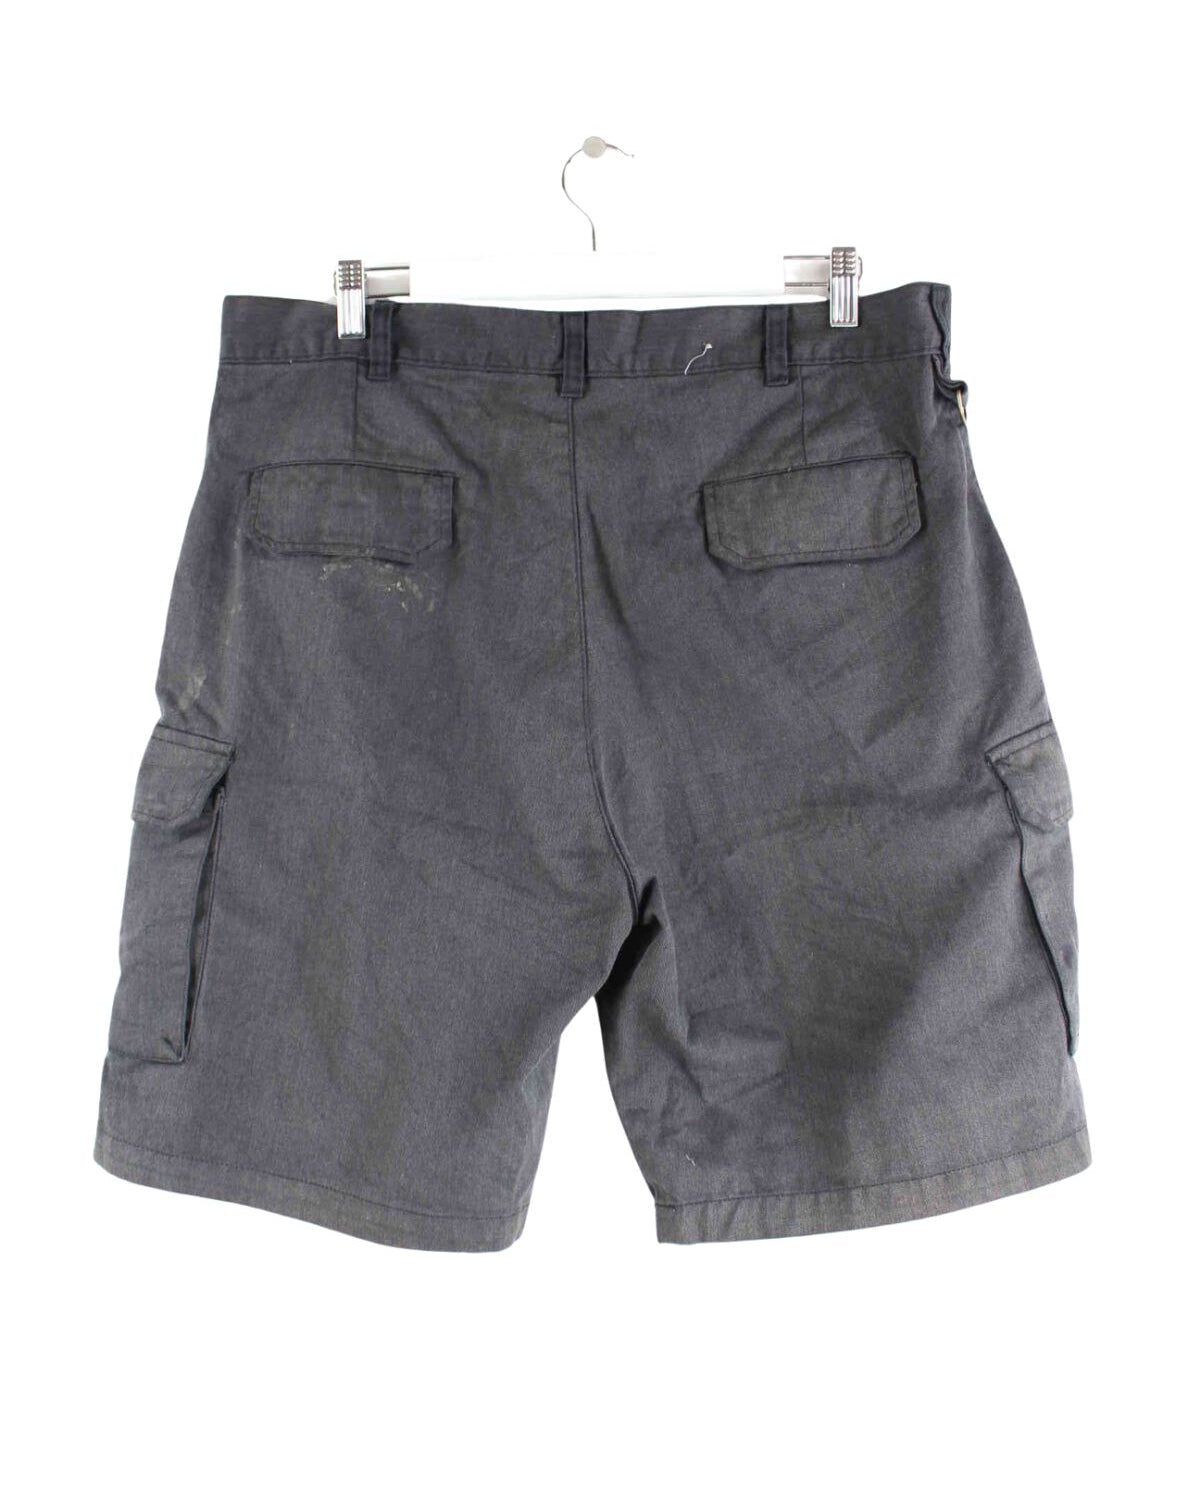 Dickies Workwear Shorts Grau W36 (back image)